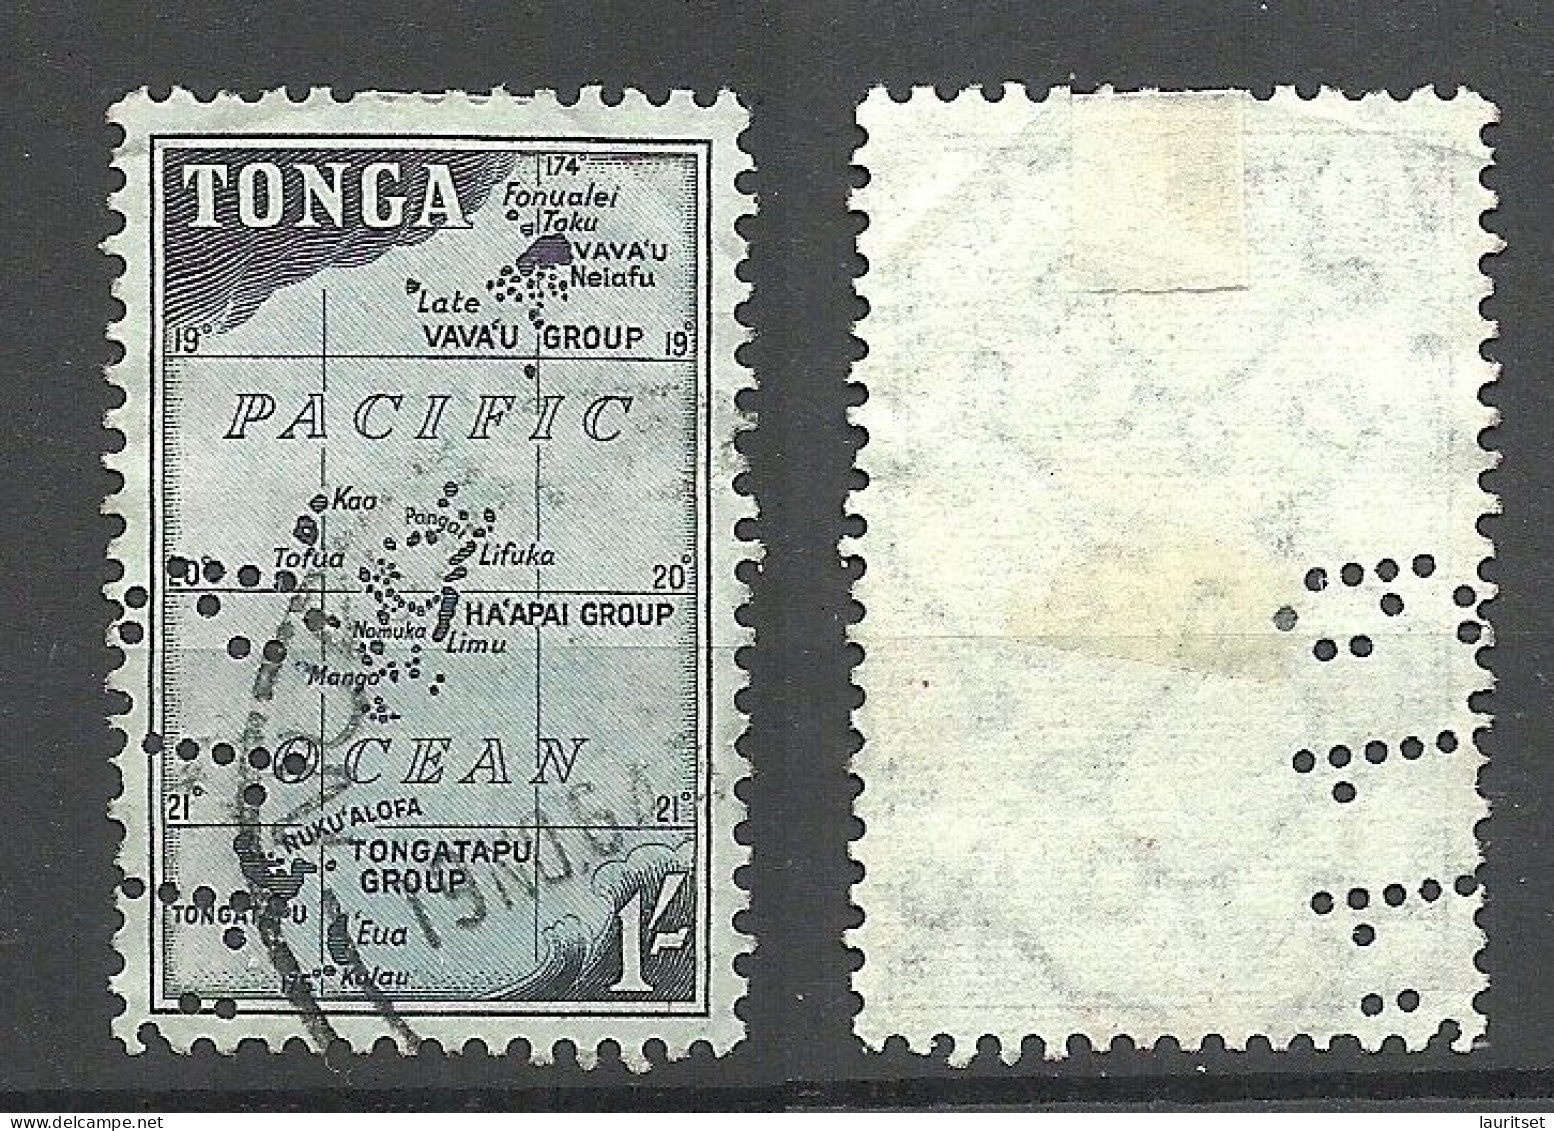 TONGA 1953 Michel 109 Map Karte With Perfin Firmenlochung - Tonga (...-1970)